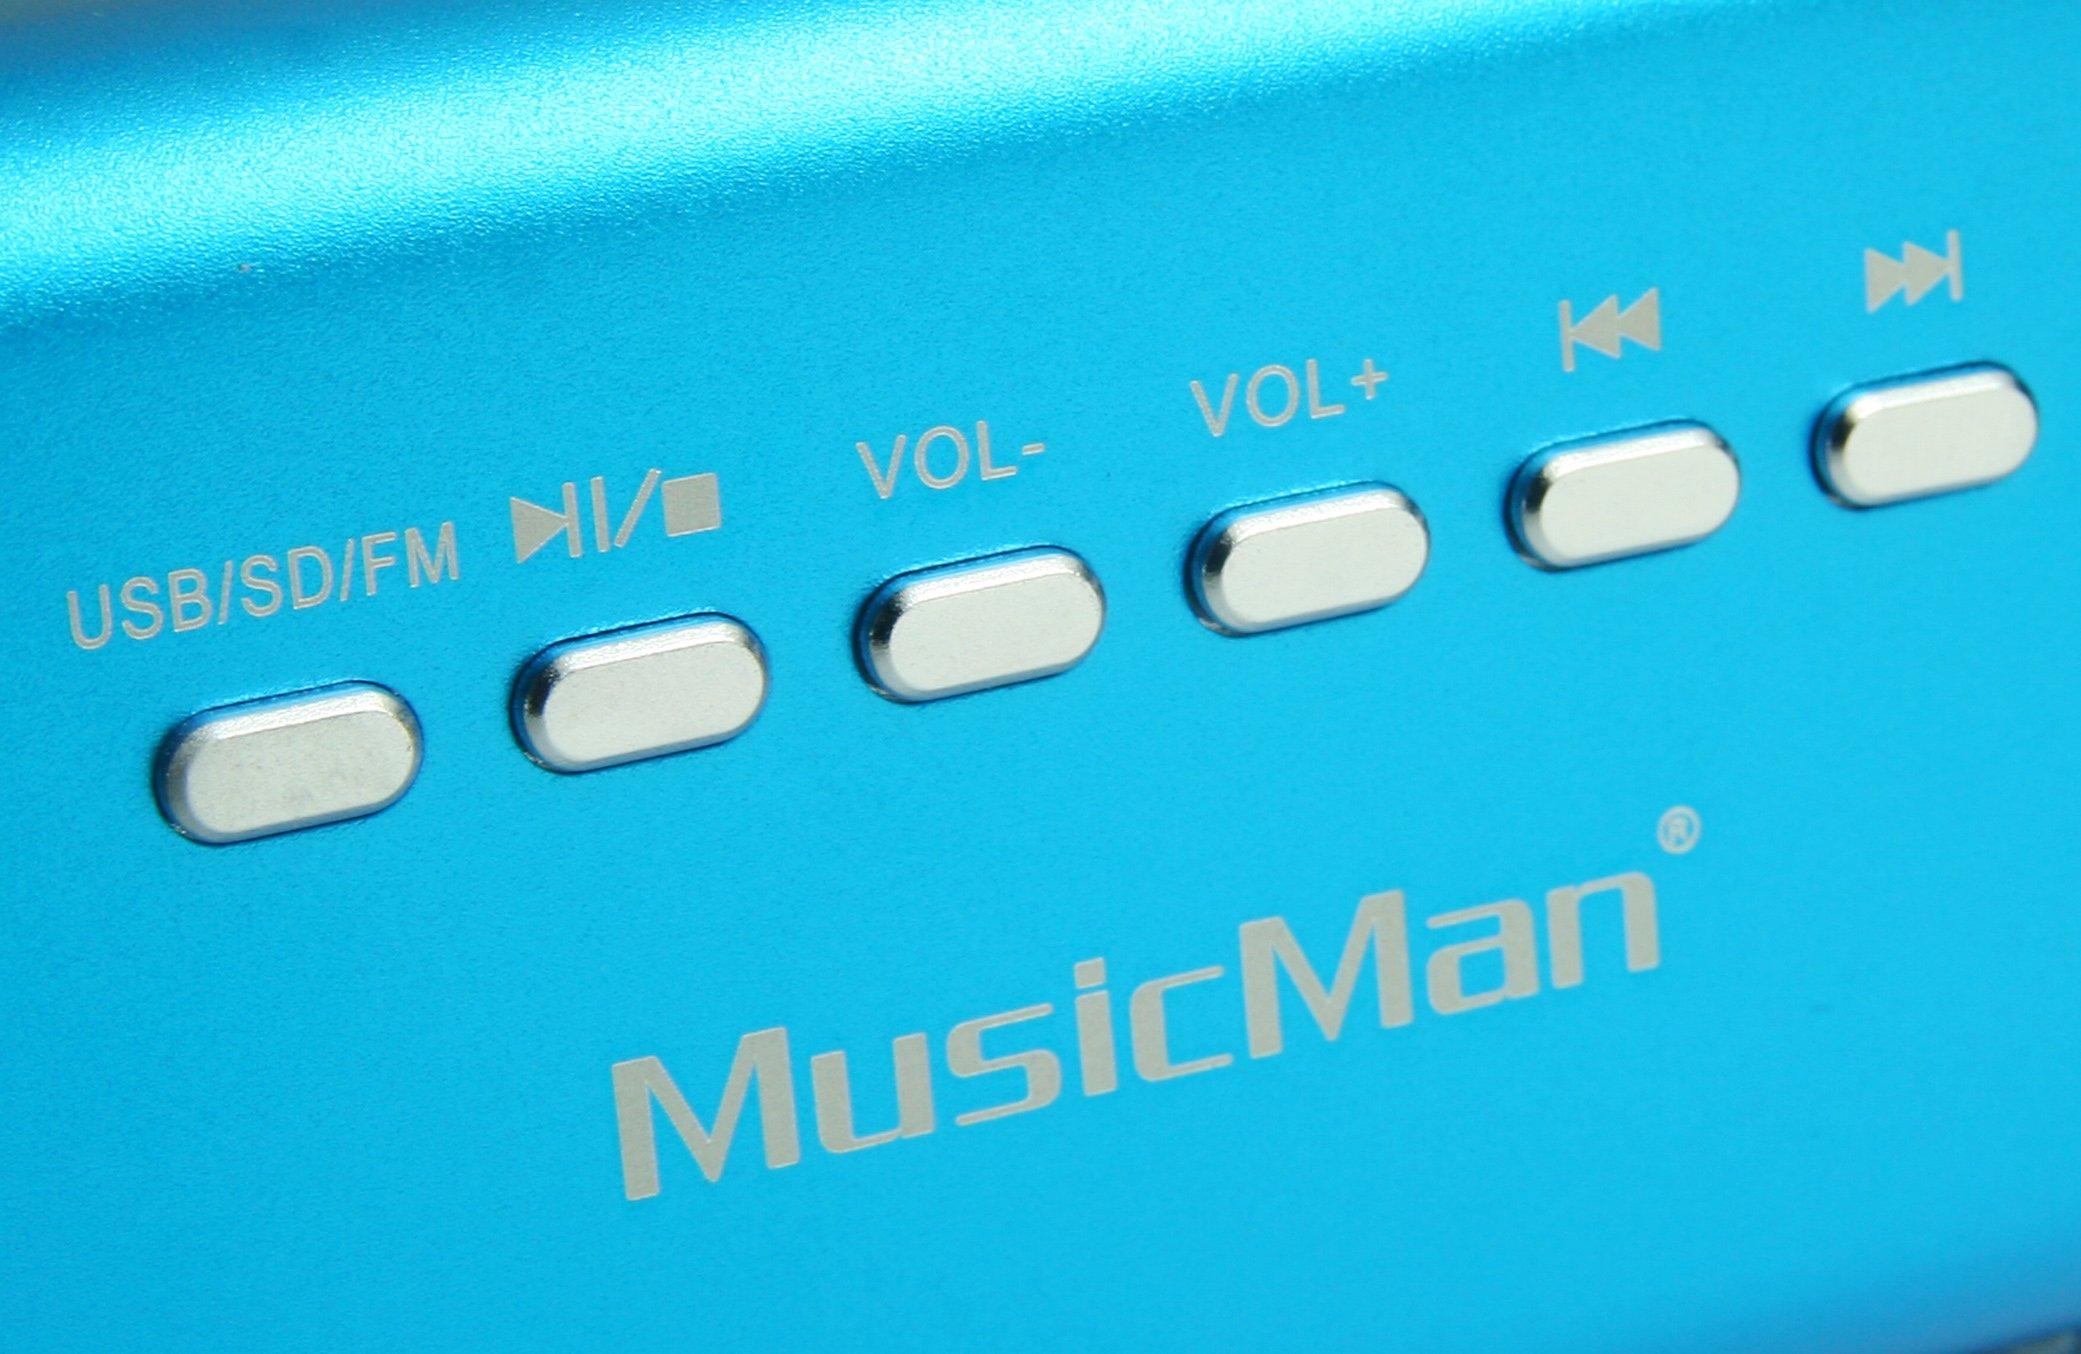 Technaxx  MusicMan MA Soundstation Bleu 6 W 